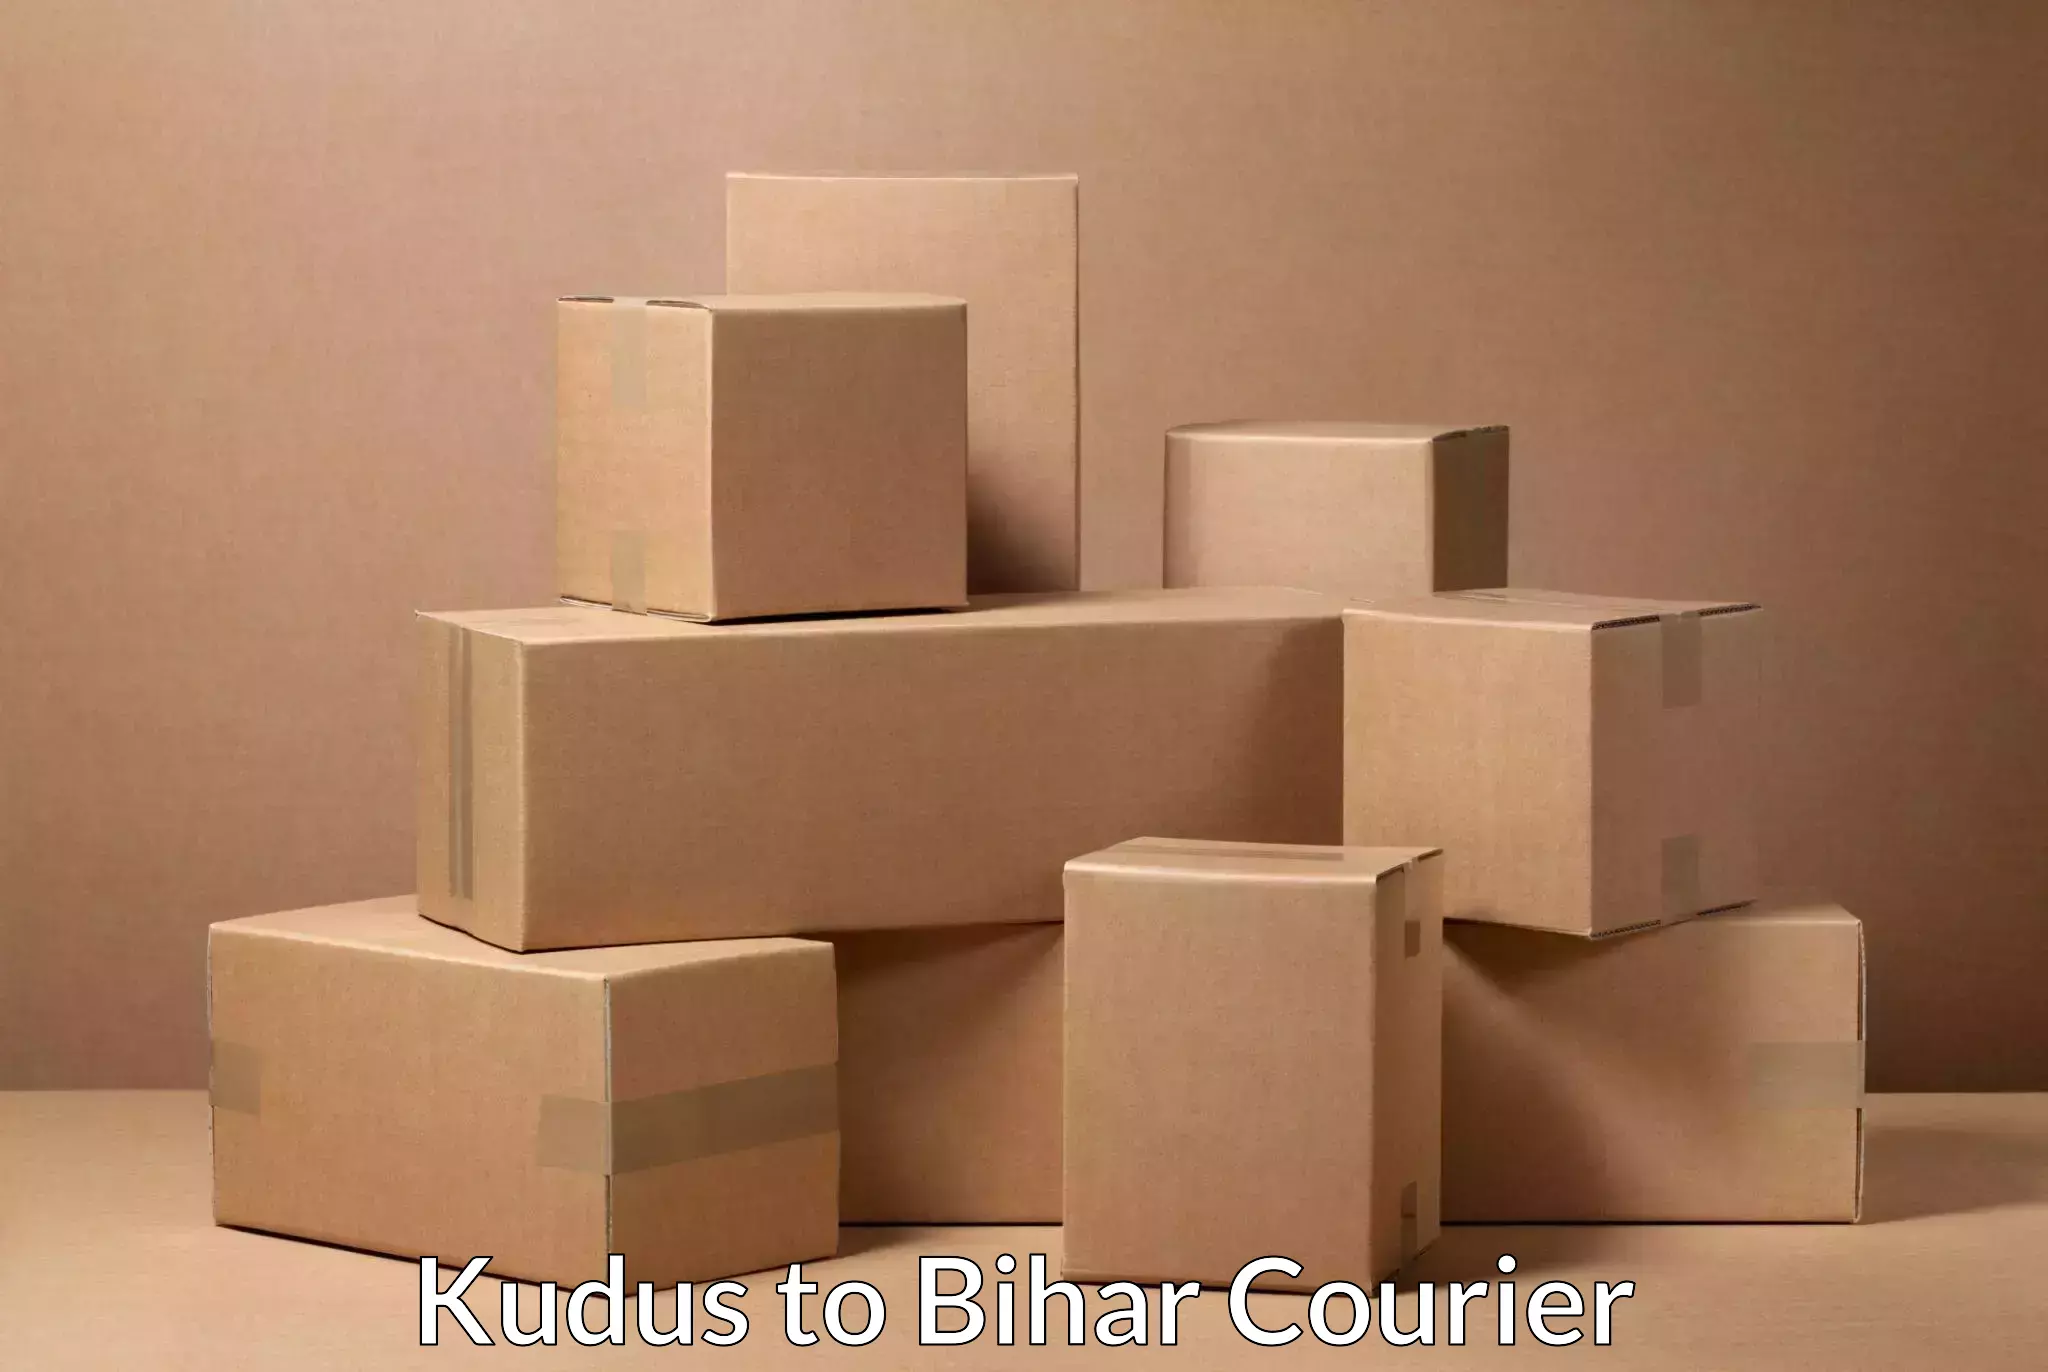 High-performance logistics Kudus to Bihar